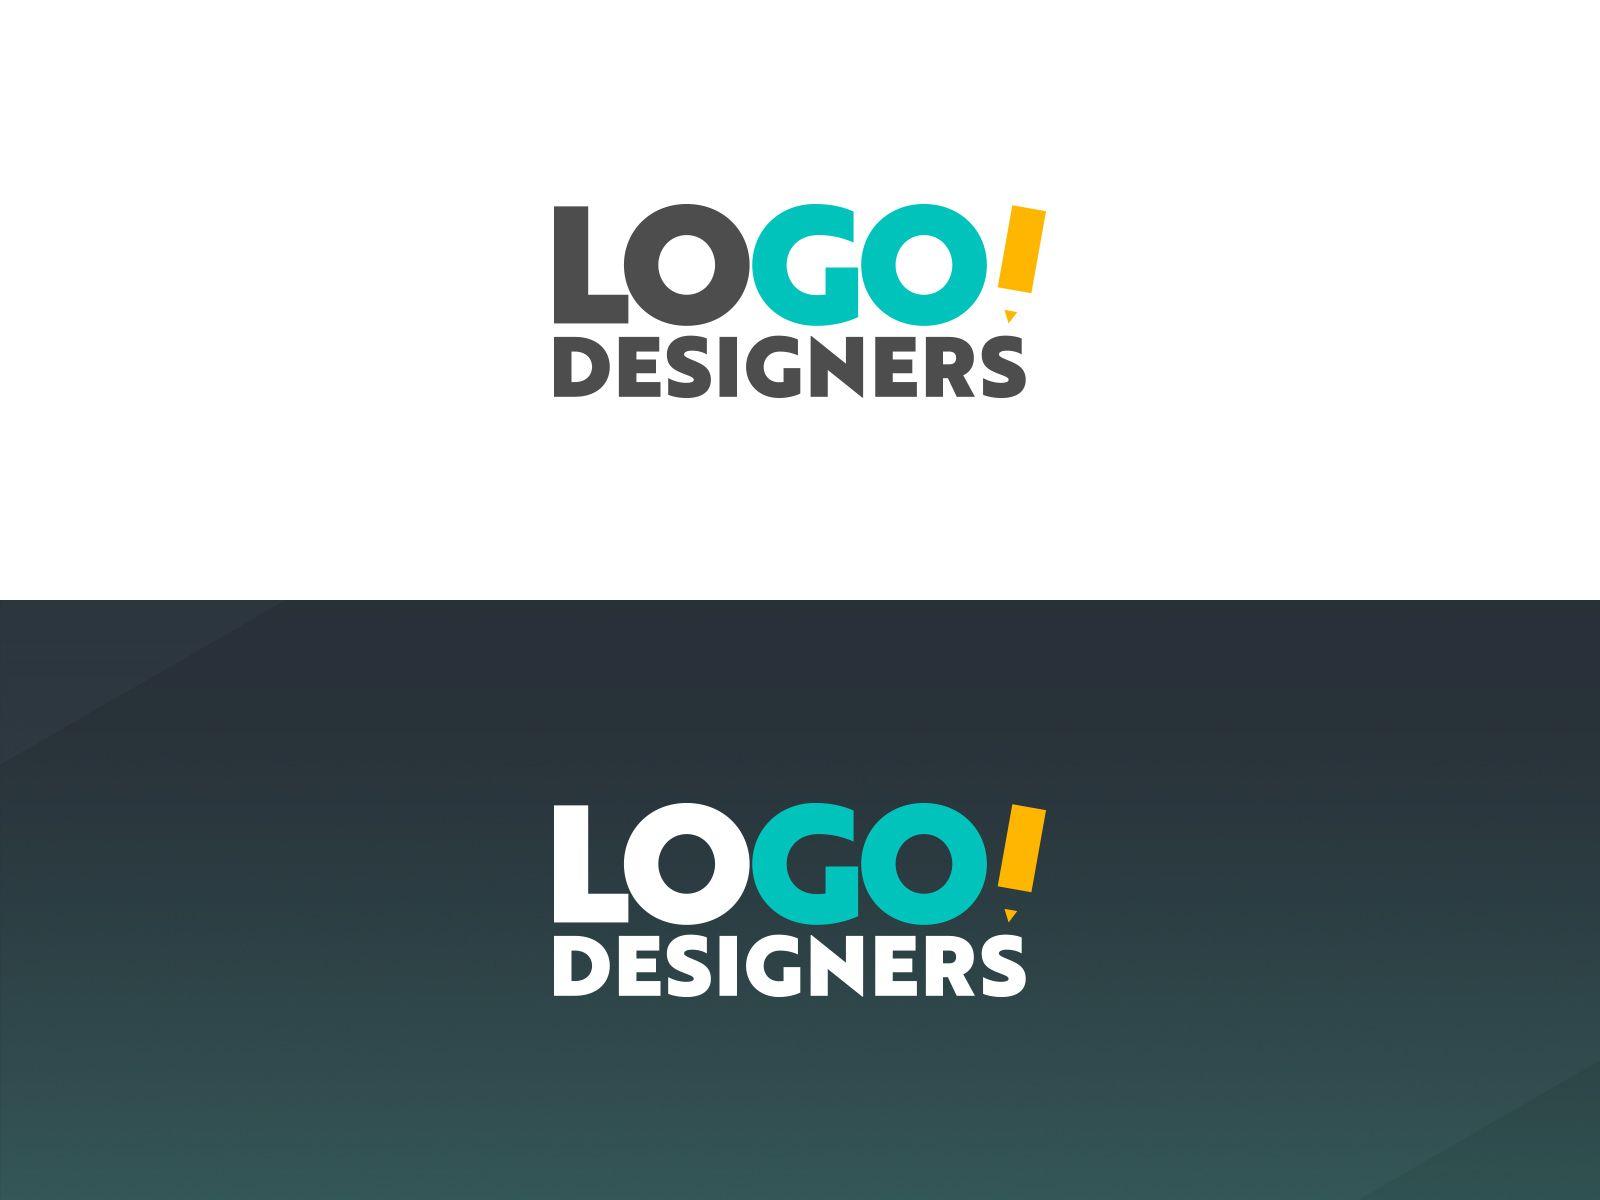 Designers Logo - Logo Designers by Marco Sarracino - Gut Feeling | Dribbble | Dribbble